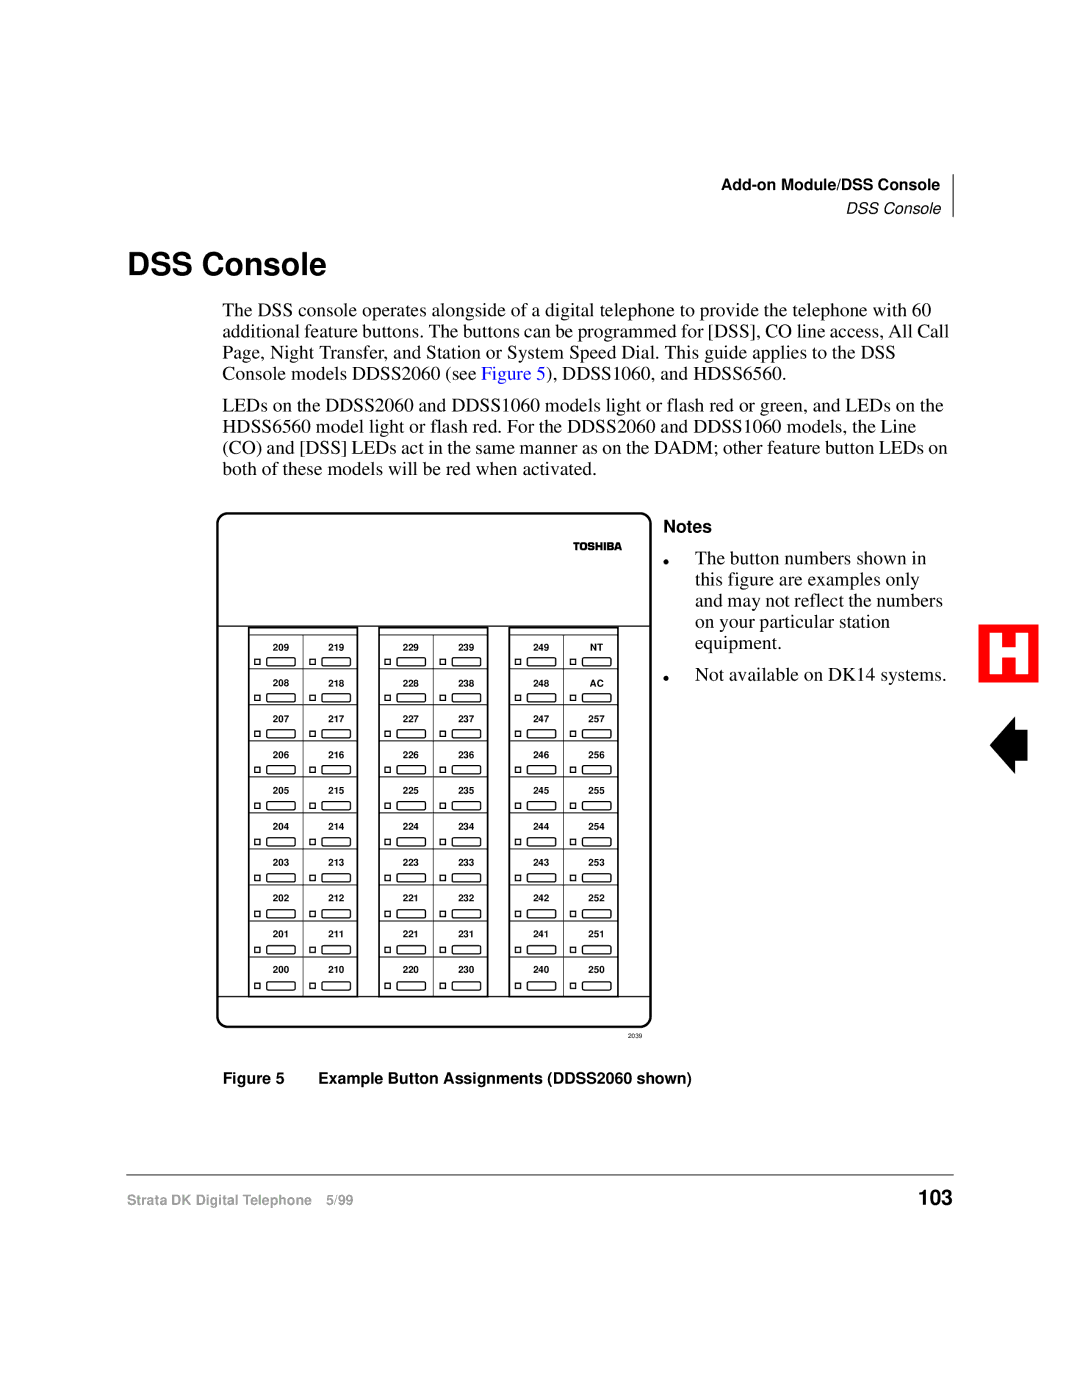 Toshiba Digital Telephone manual DSS Console, 103 